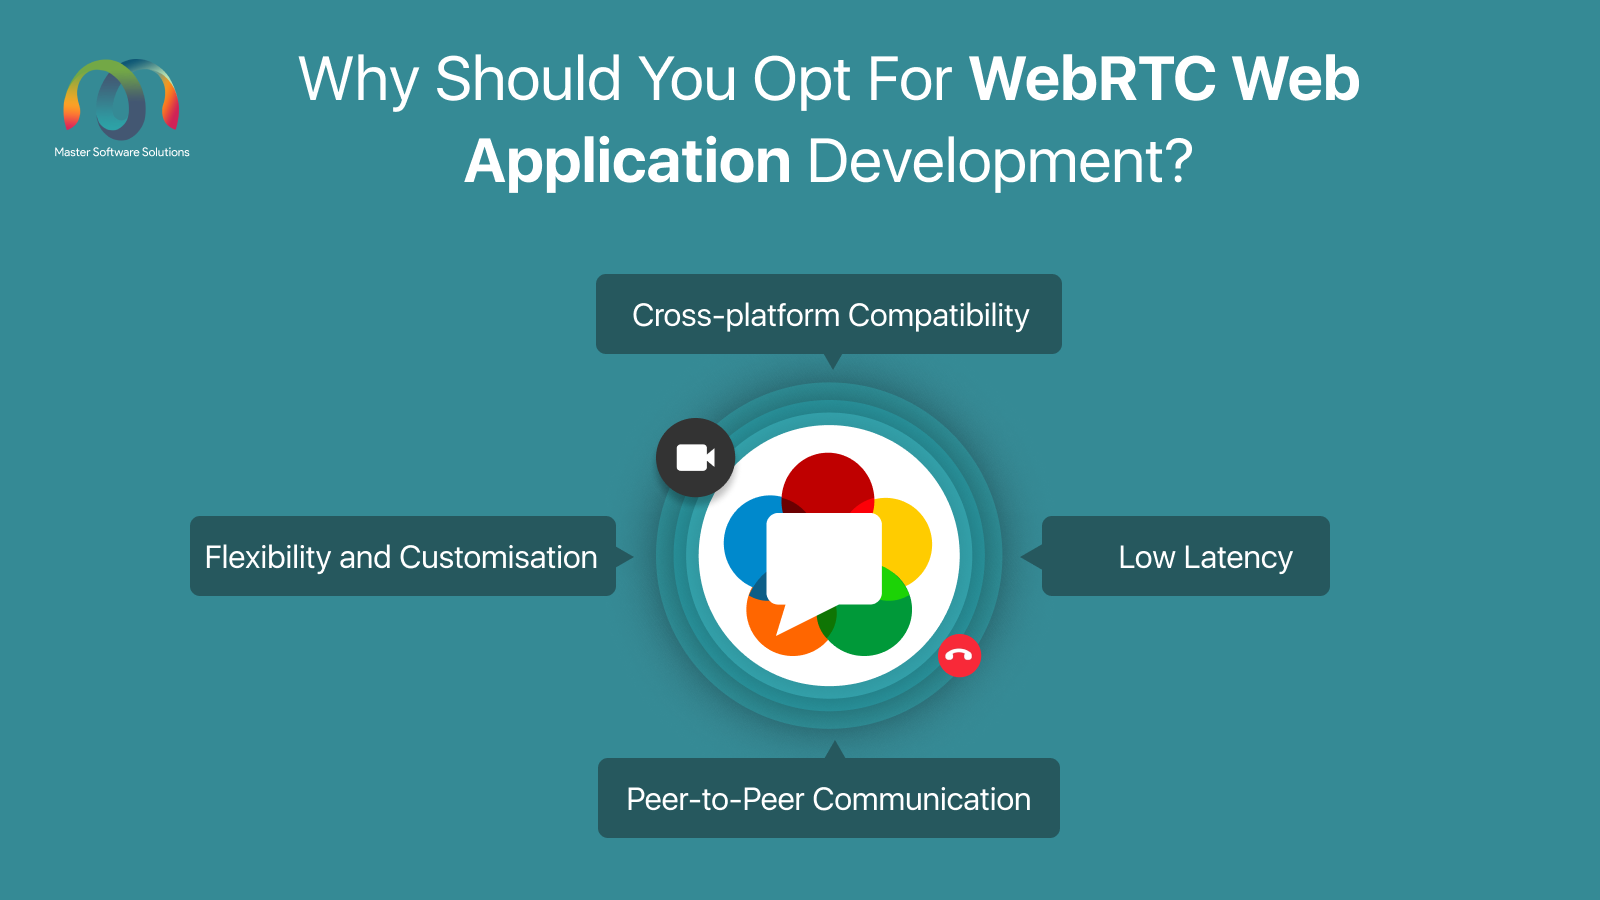 ravi garg, mss, reasons, webrtc web application development, cross-platform compatibility, low latency, peer-to-peer communication, flexibility, customisation